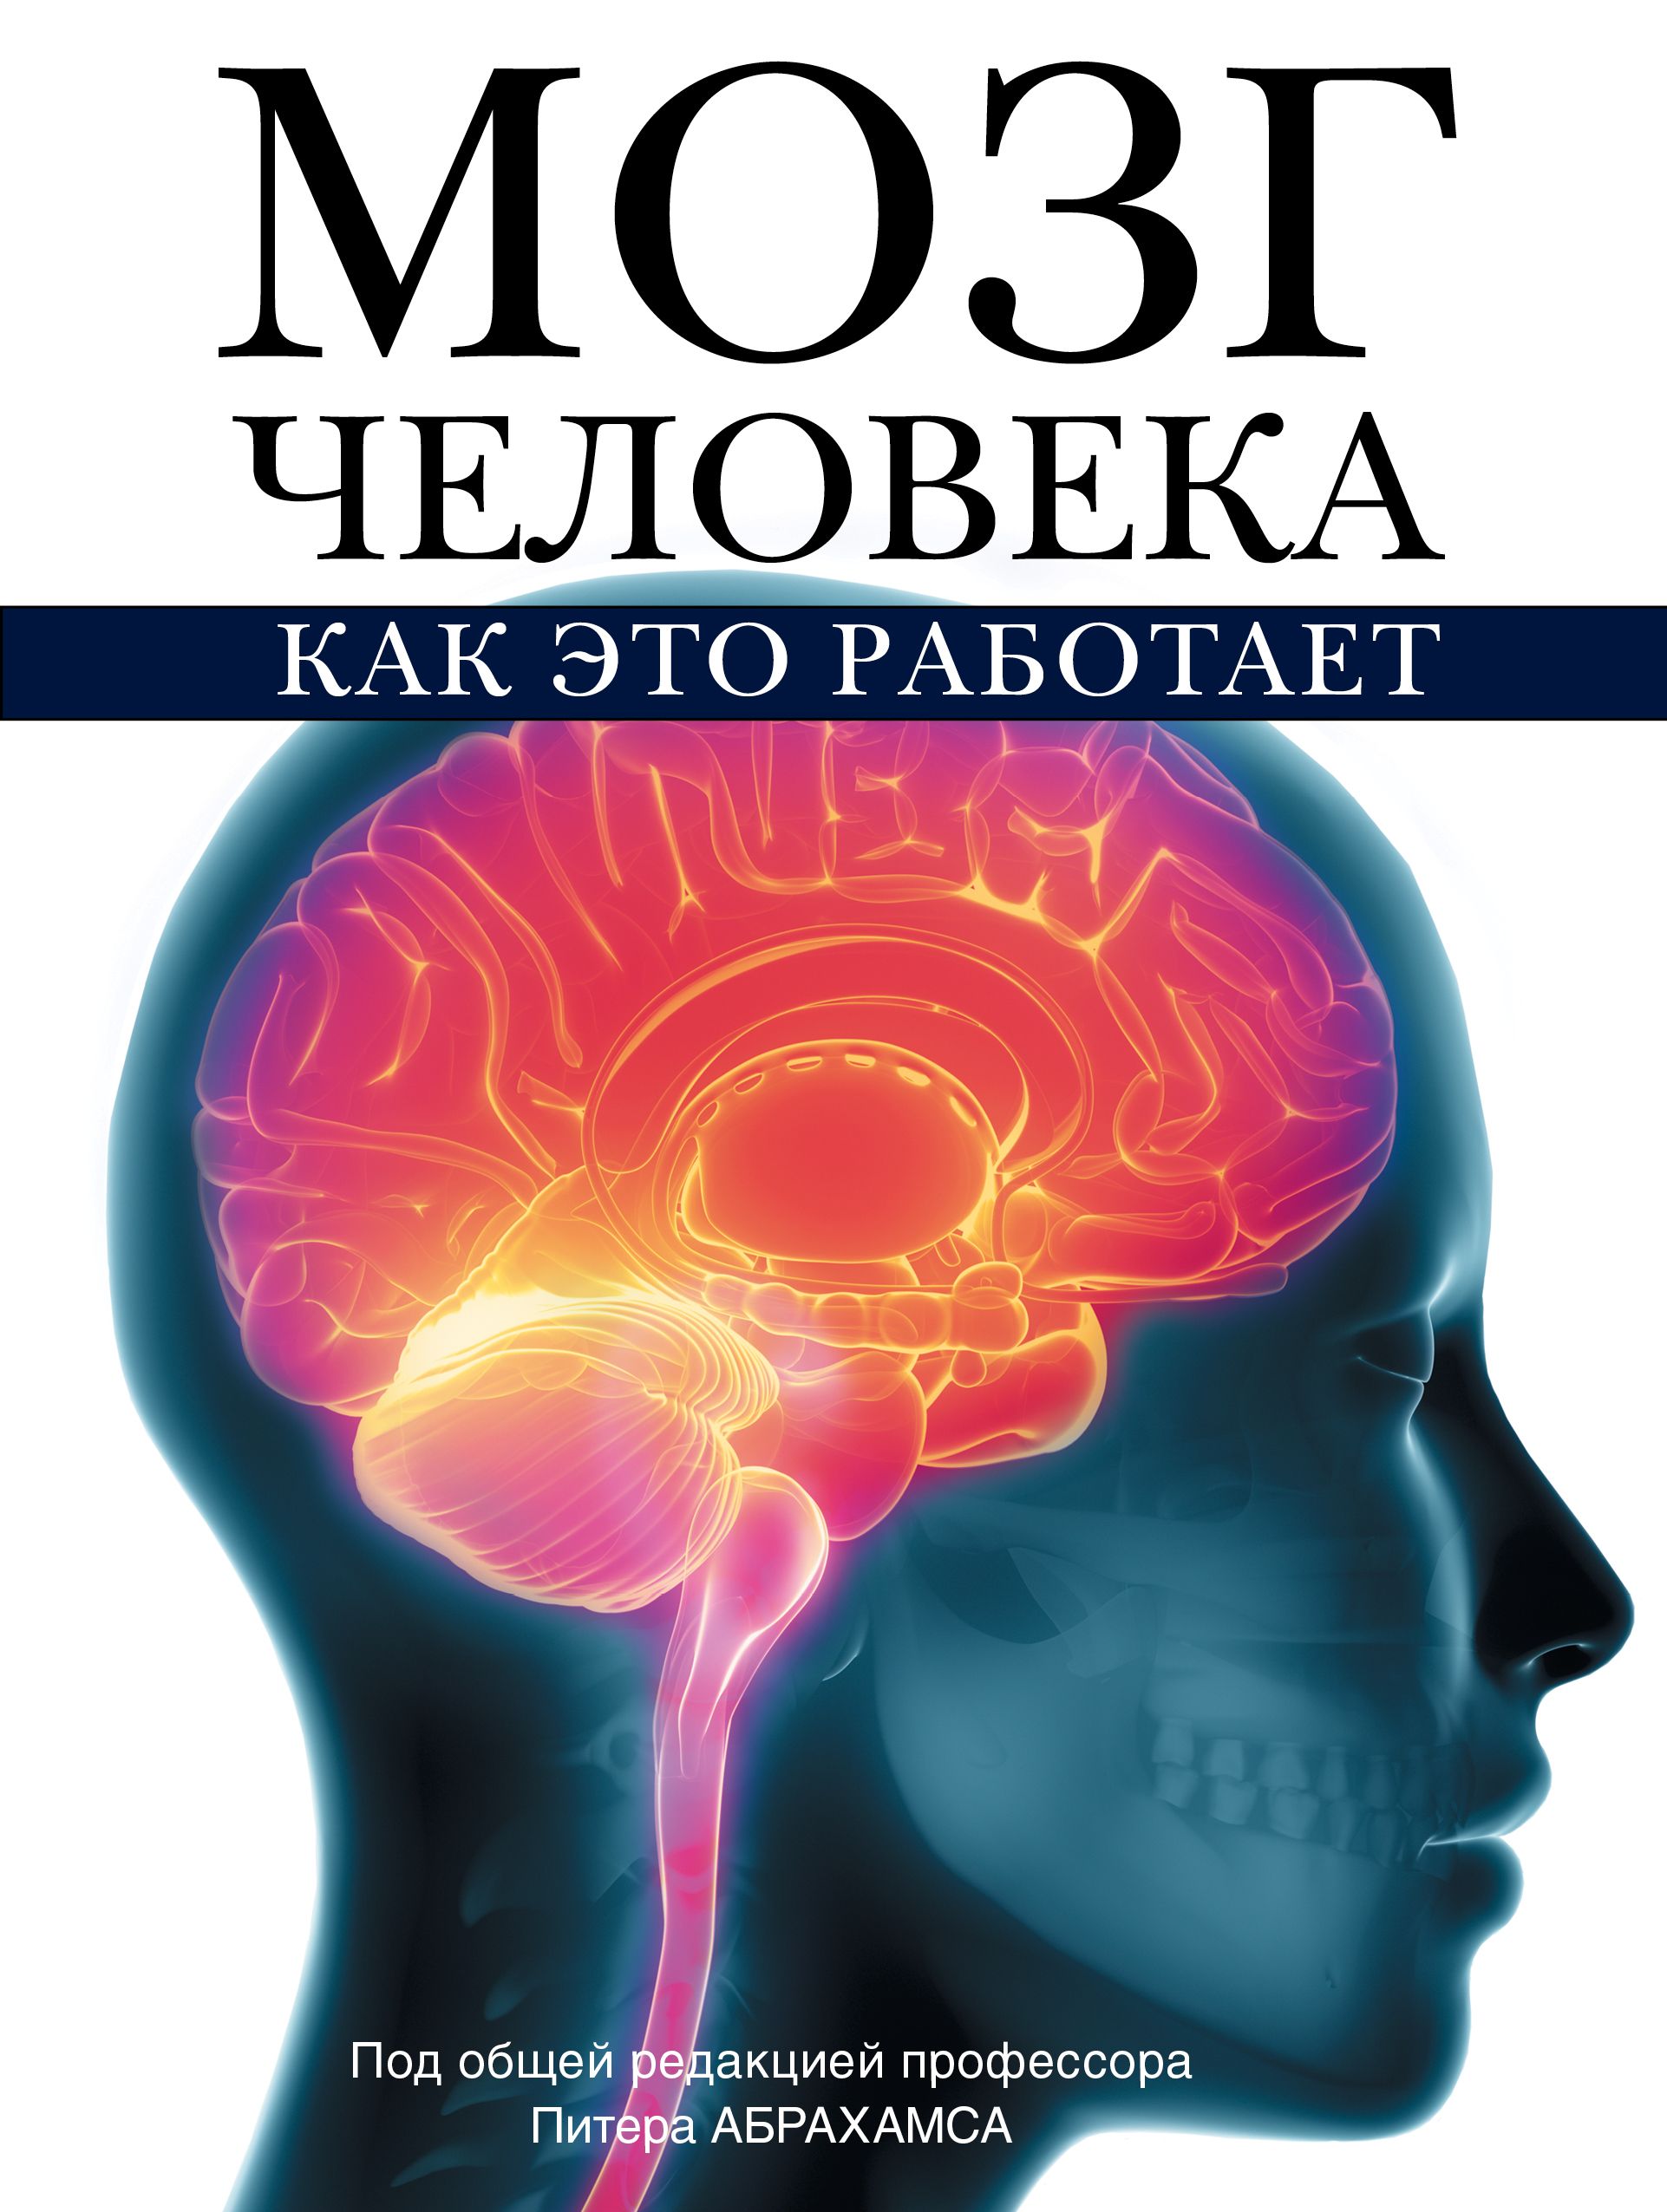 Купить мозги спб. Книга мозг. Книга про мозг человека. Мозг с книжкой.